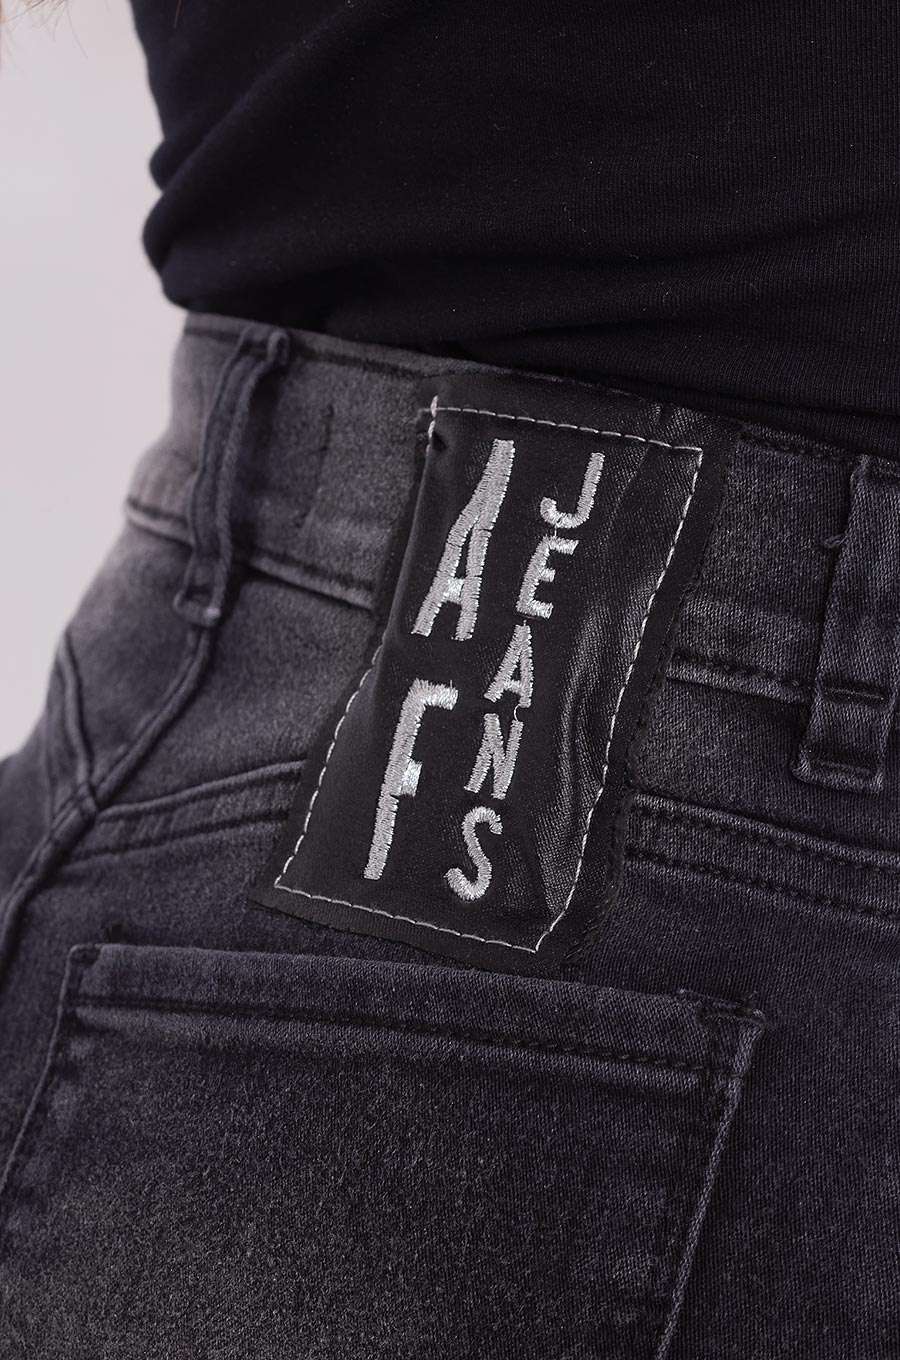 AF Jeans - A123293001 Mini Spark detalle - Córdoba